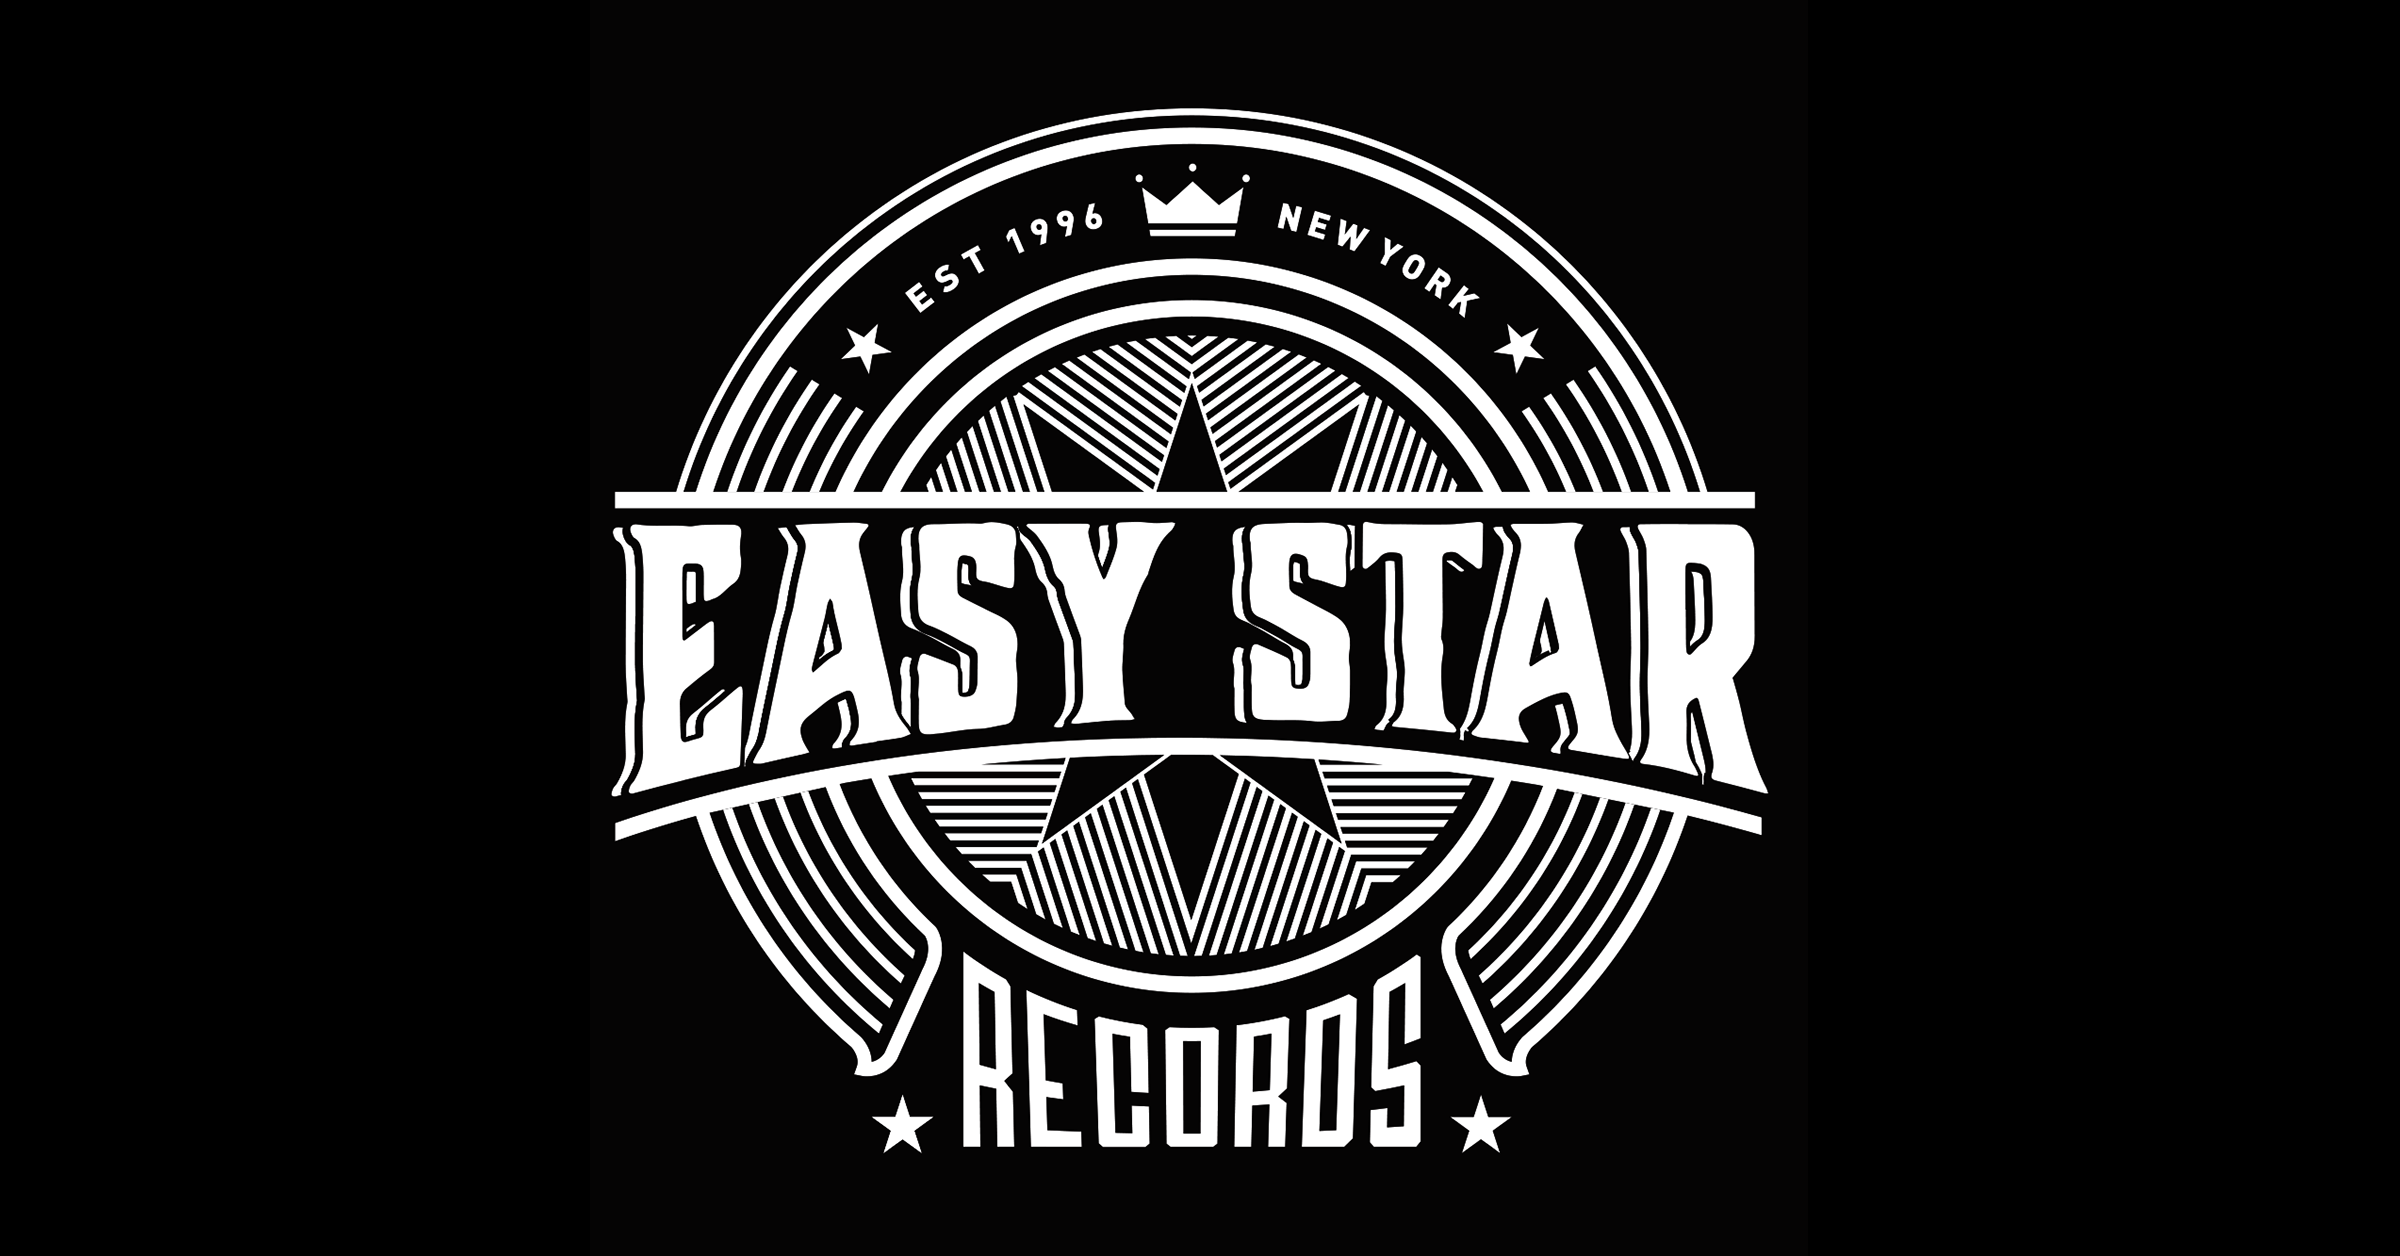 (c) Easystar.com